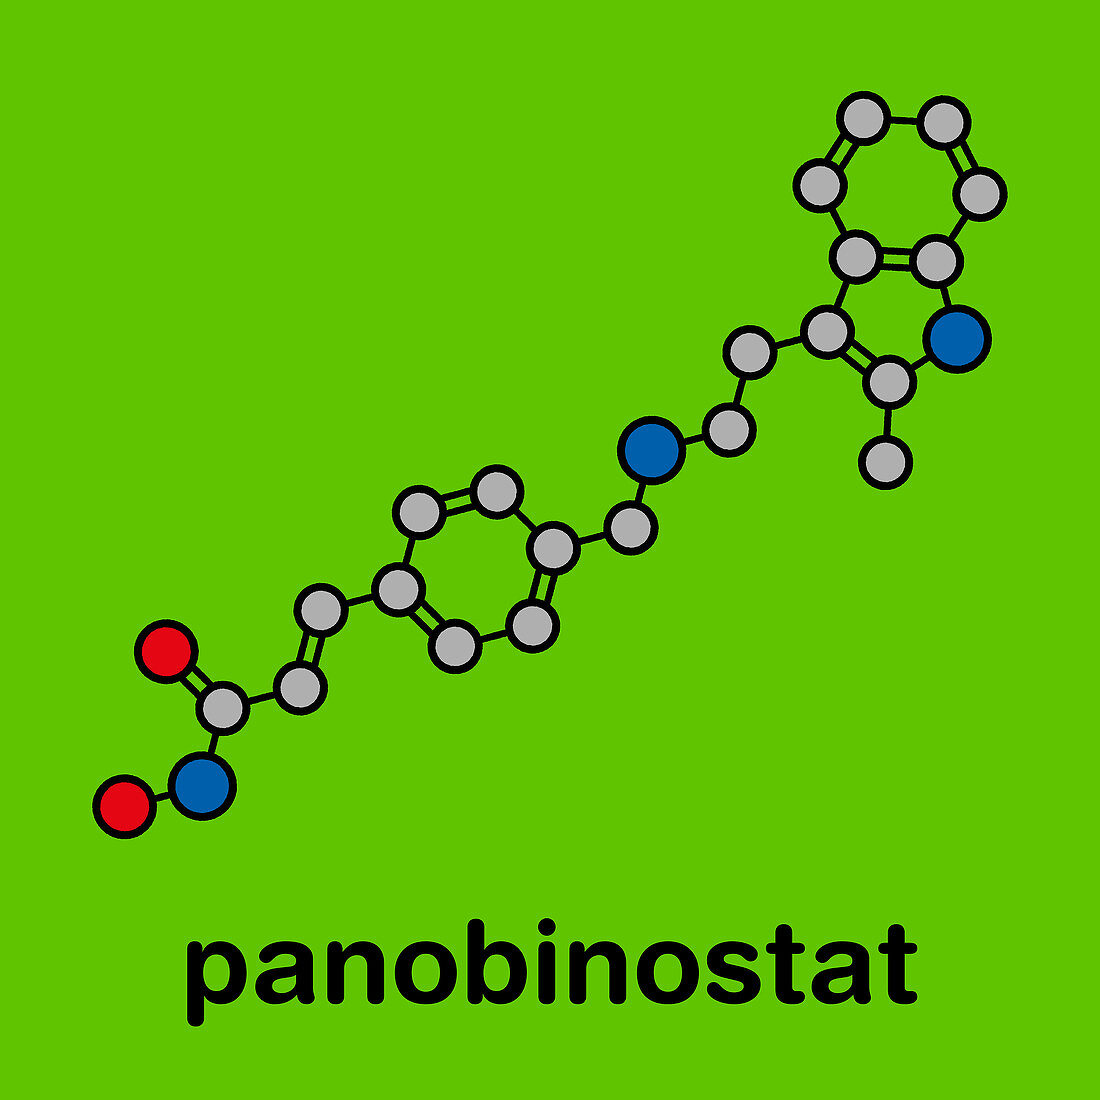 Panobinostat cancer drug molecule, illustration